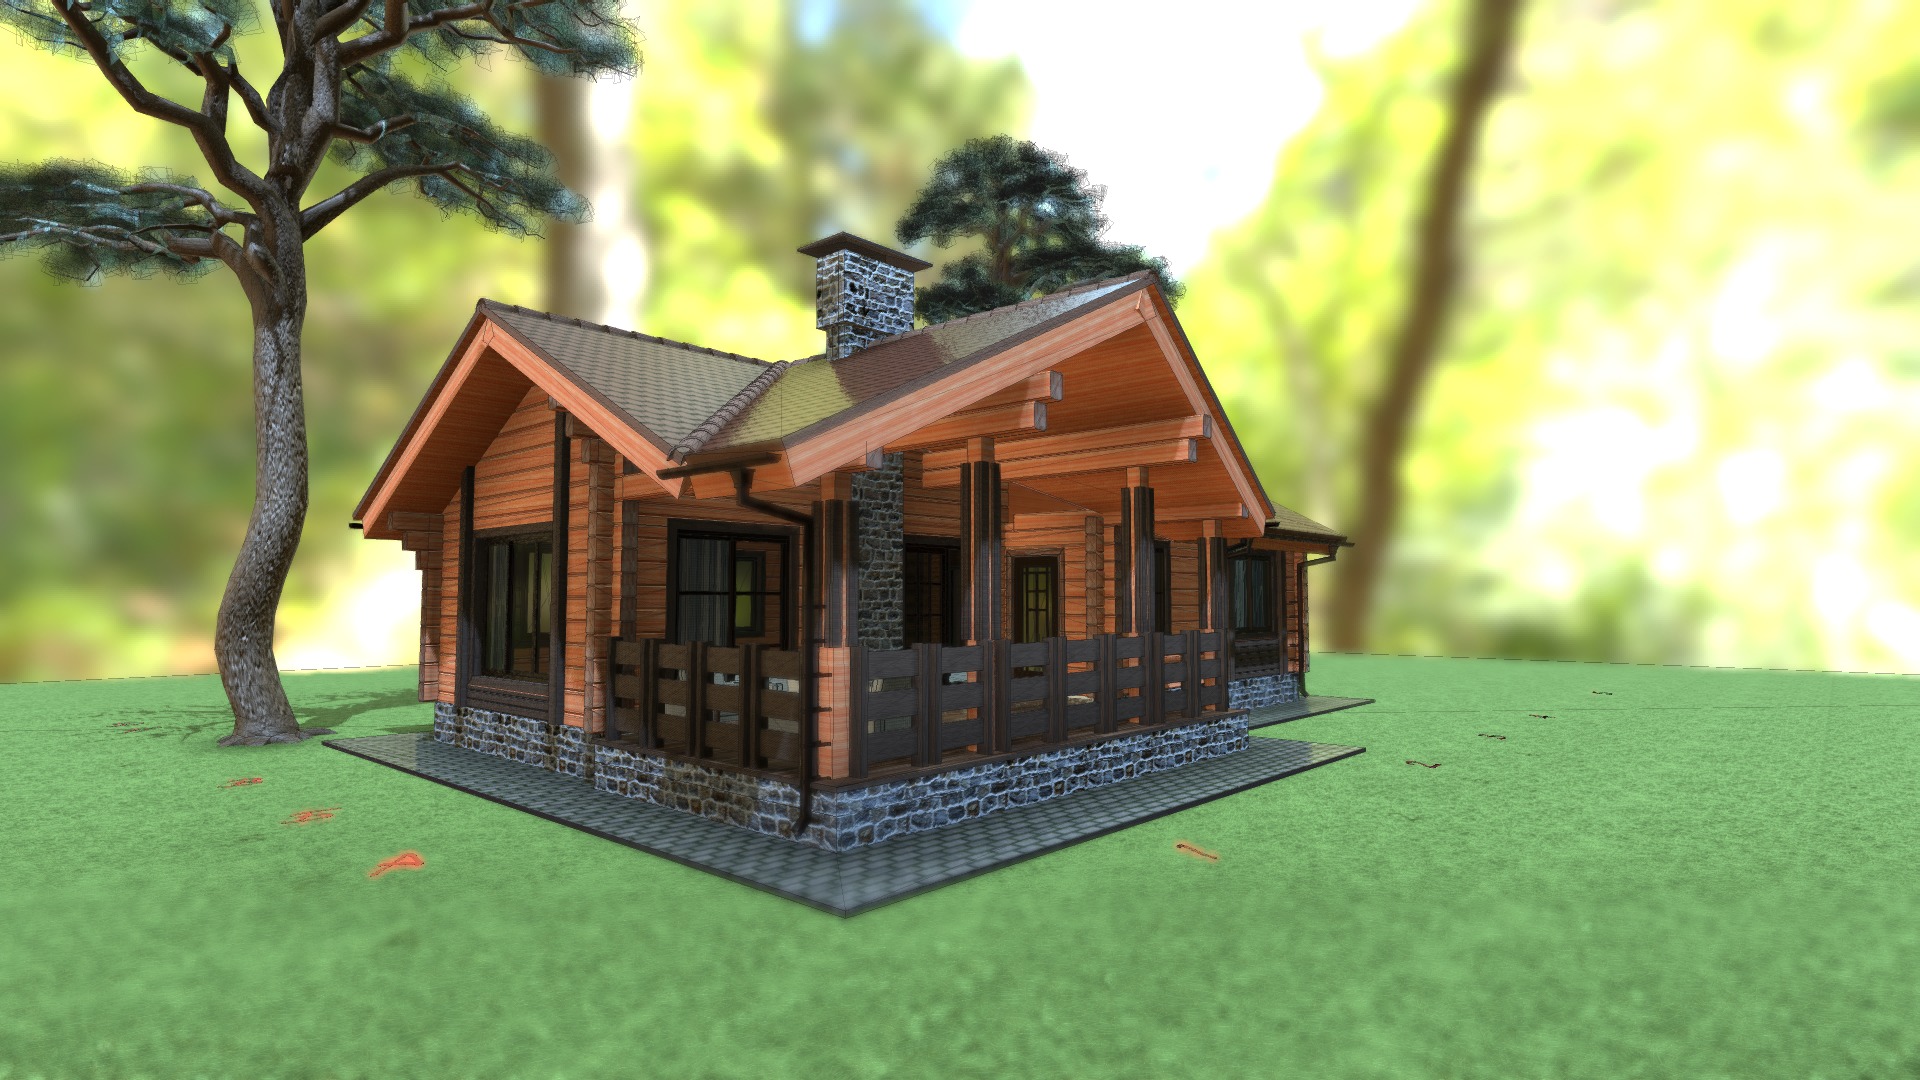 3D model Одноэтажный гостевой дом с двумя спальнями - This is a 3D model of the Одноэтажный гостевой дом с двумя спальнями. The 3D model is about a small wooden house.